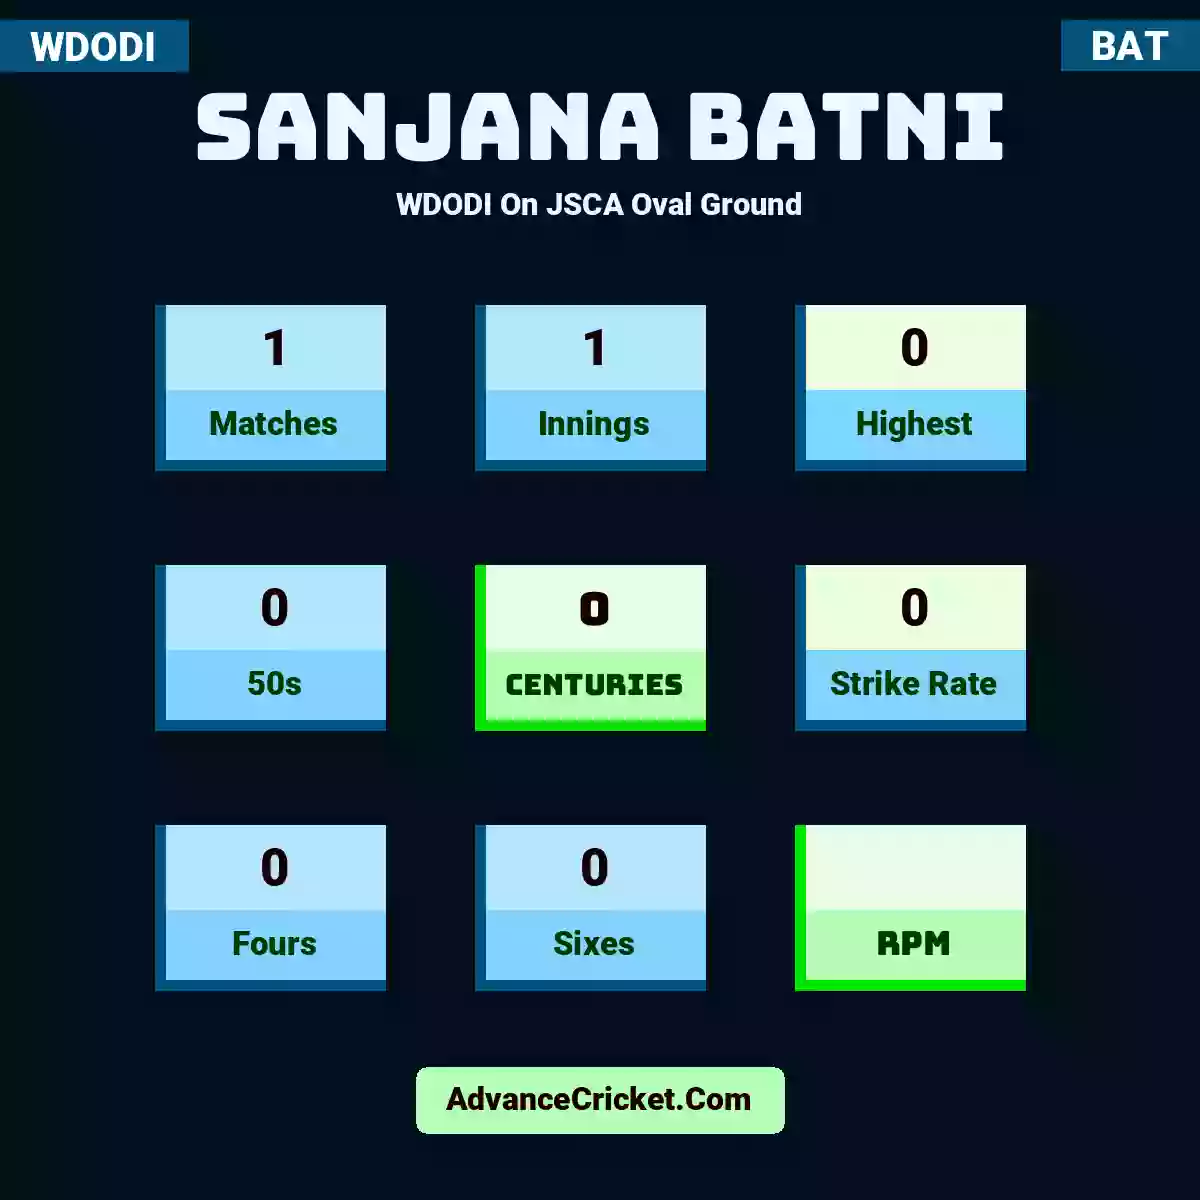 Sanjana Batni WDODI  On JSCA Oval Ground, Sanjana Batni played 1 matches, scored 0 runs as highest, 0 half-centuries, and 0 centuries, with a strike rate of 0. S.Batni hit 0 fours and 0 sixes.